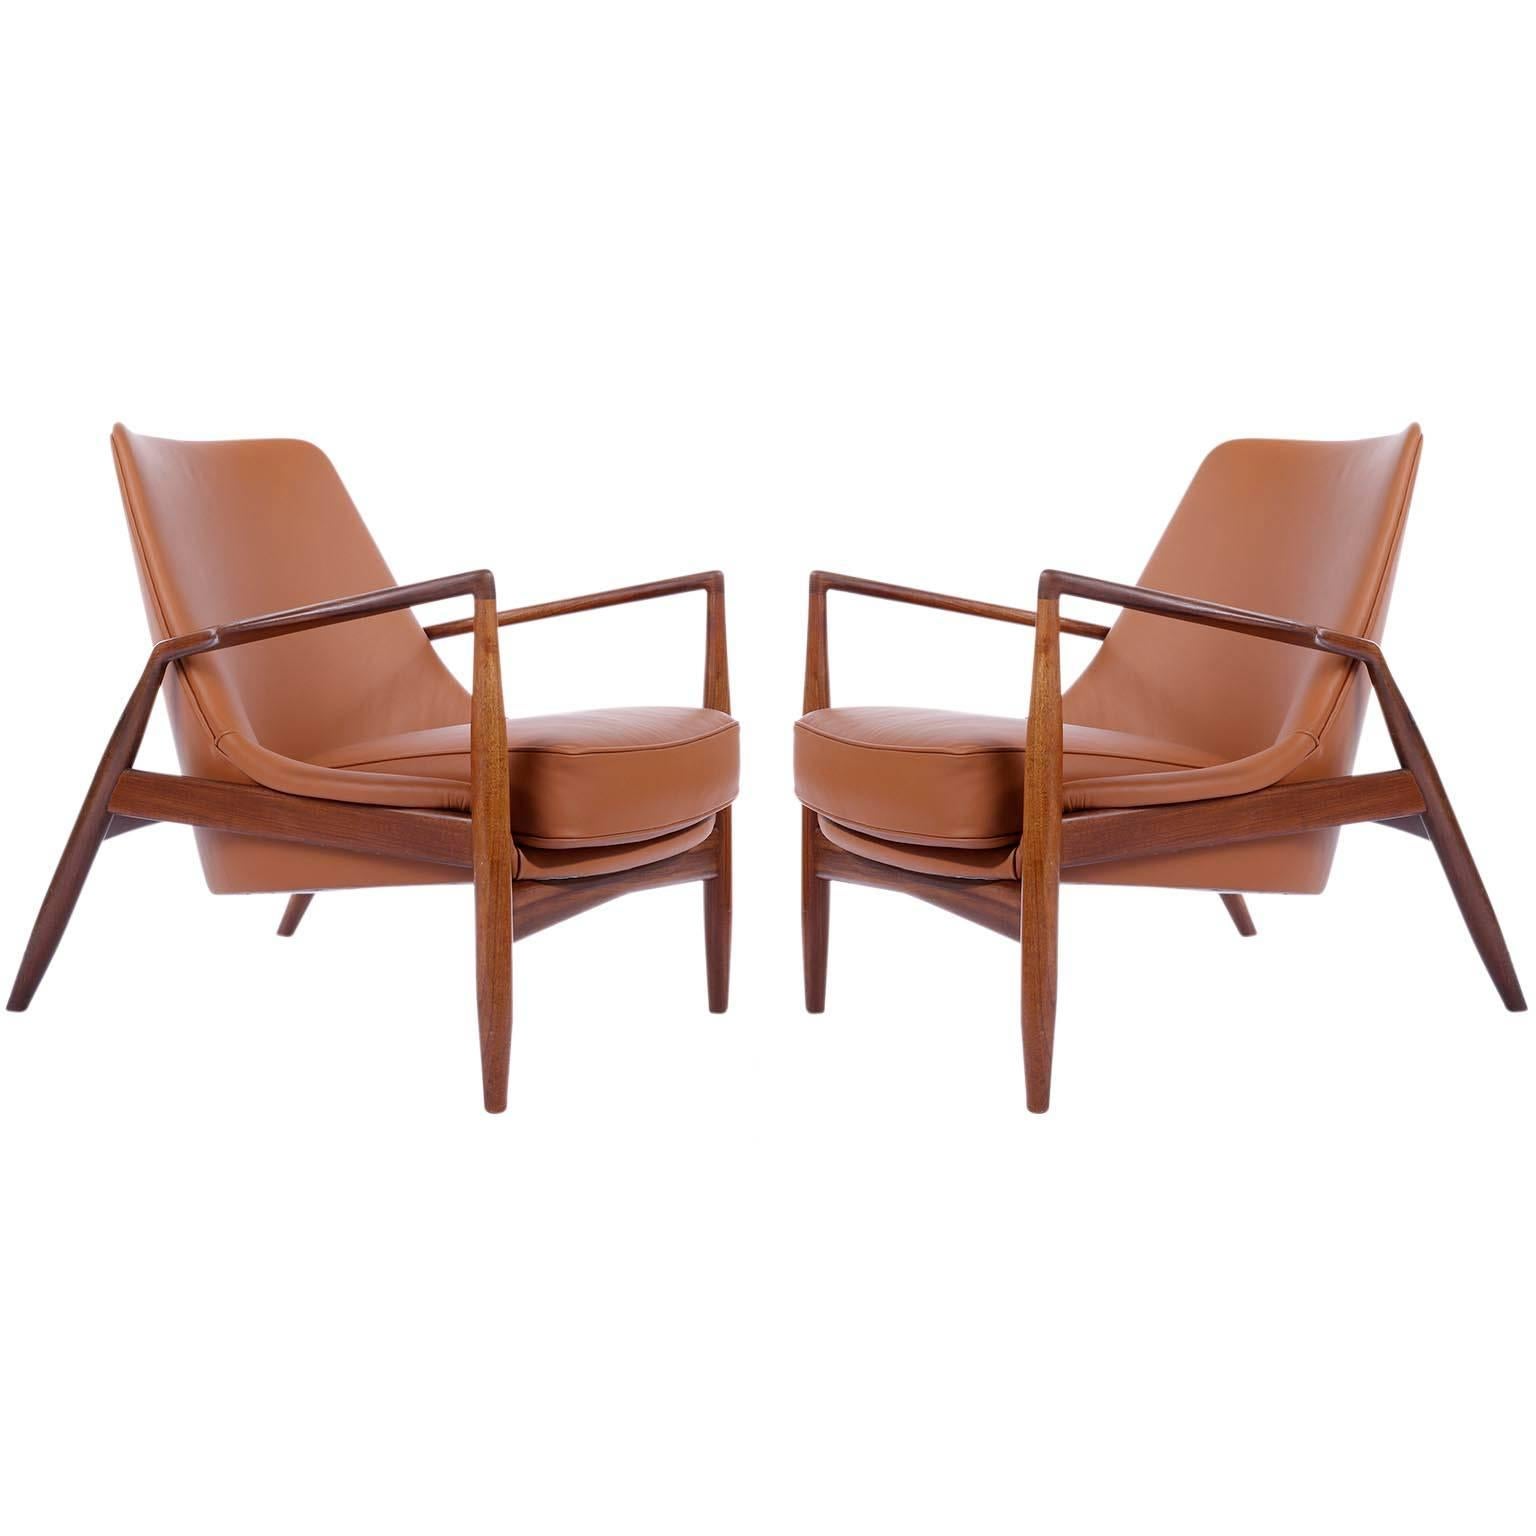 Ib Kofod-Larsen Pair of Seal Lounge Chairs in Teak Cognac Leather, Sweden, 1956